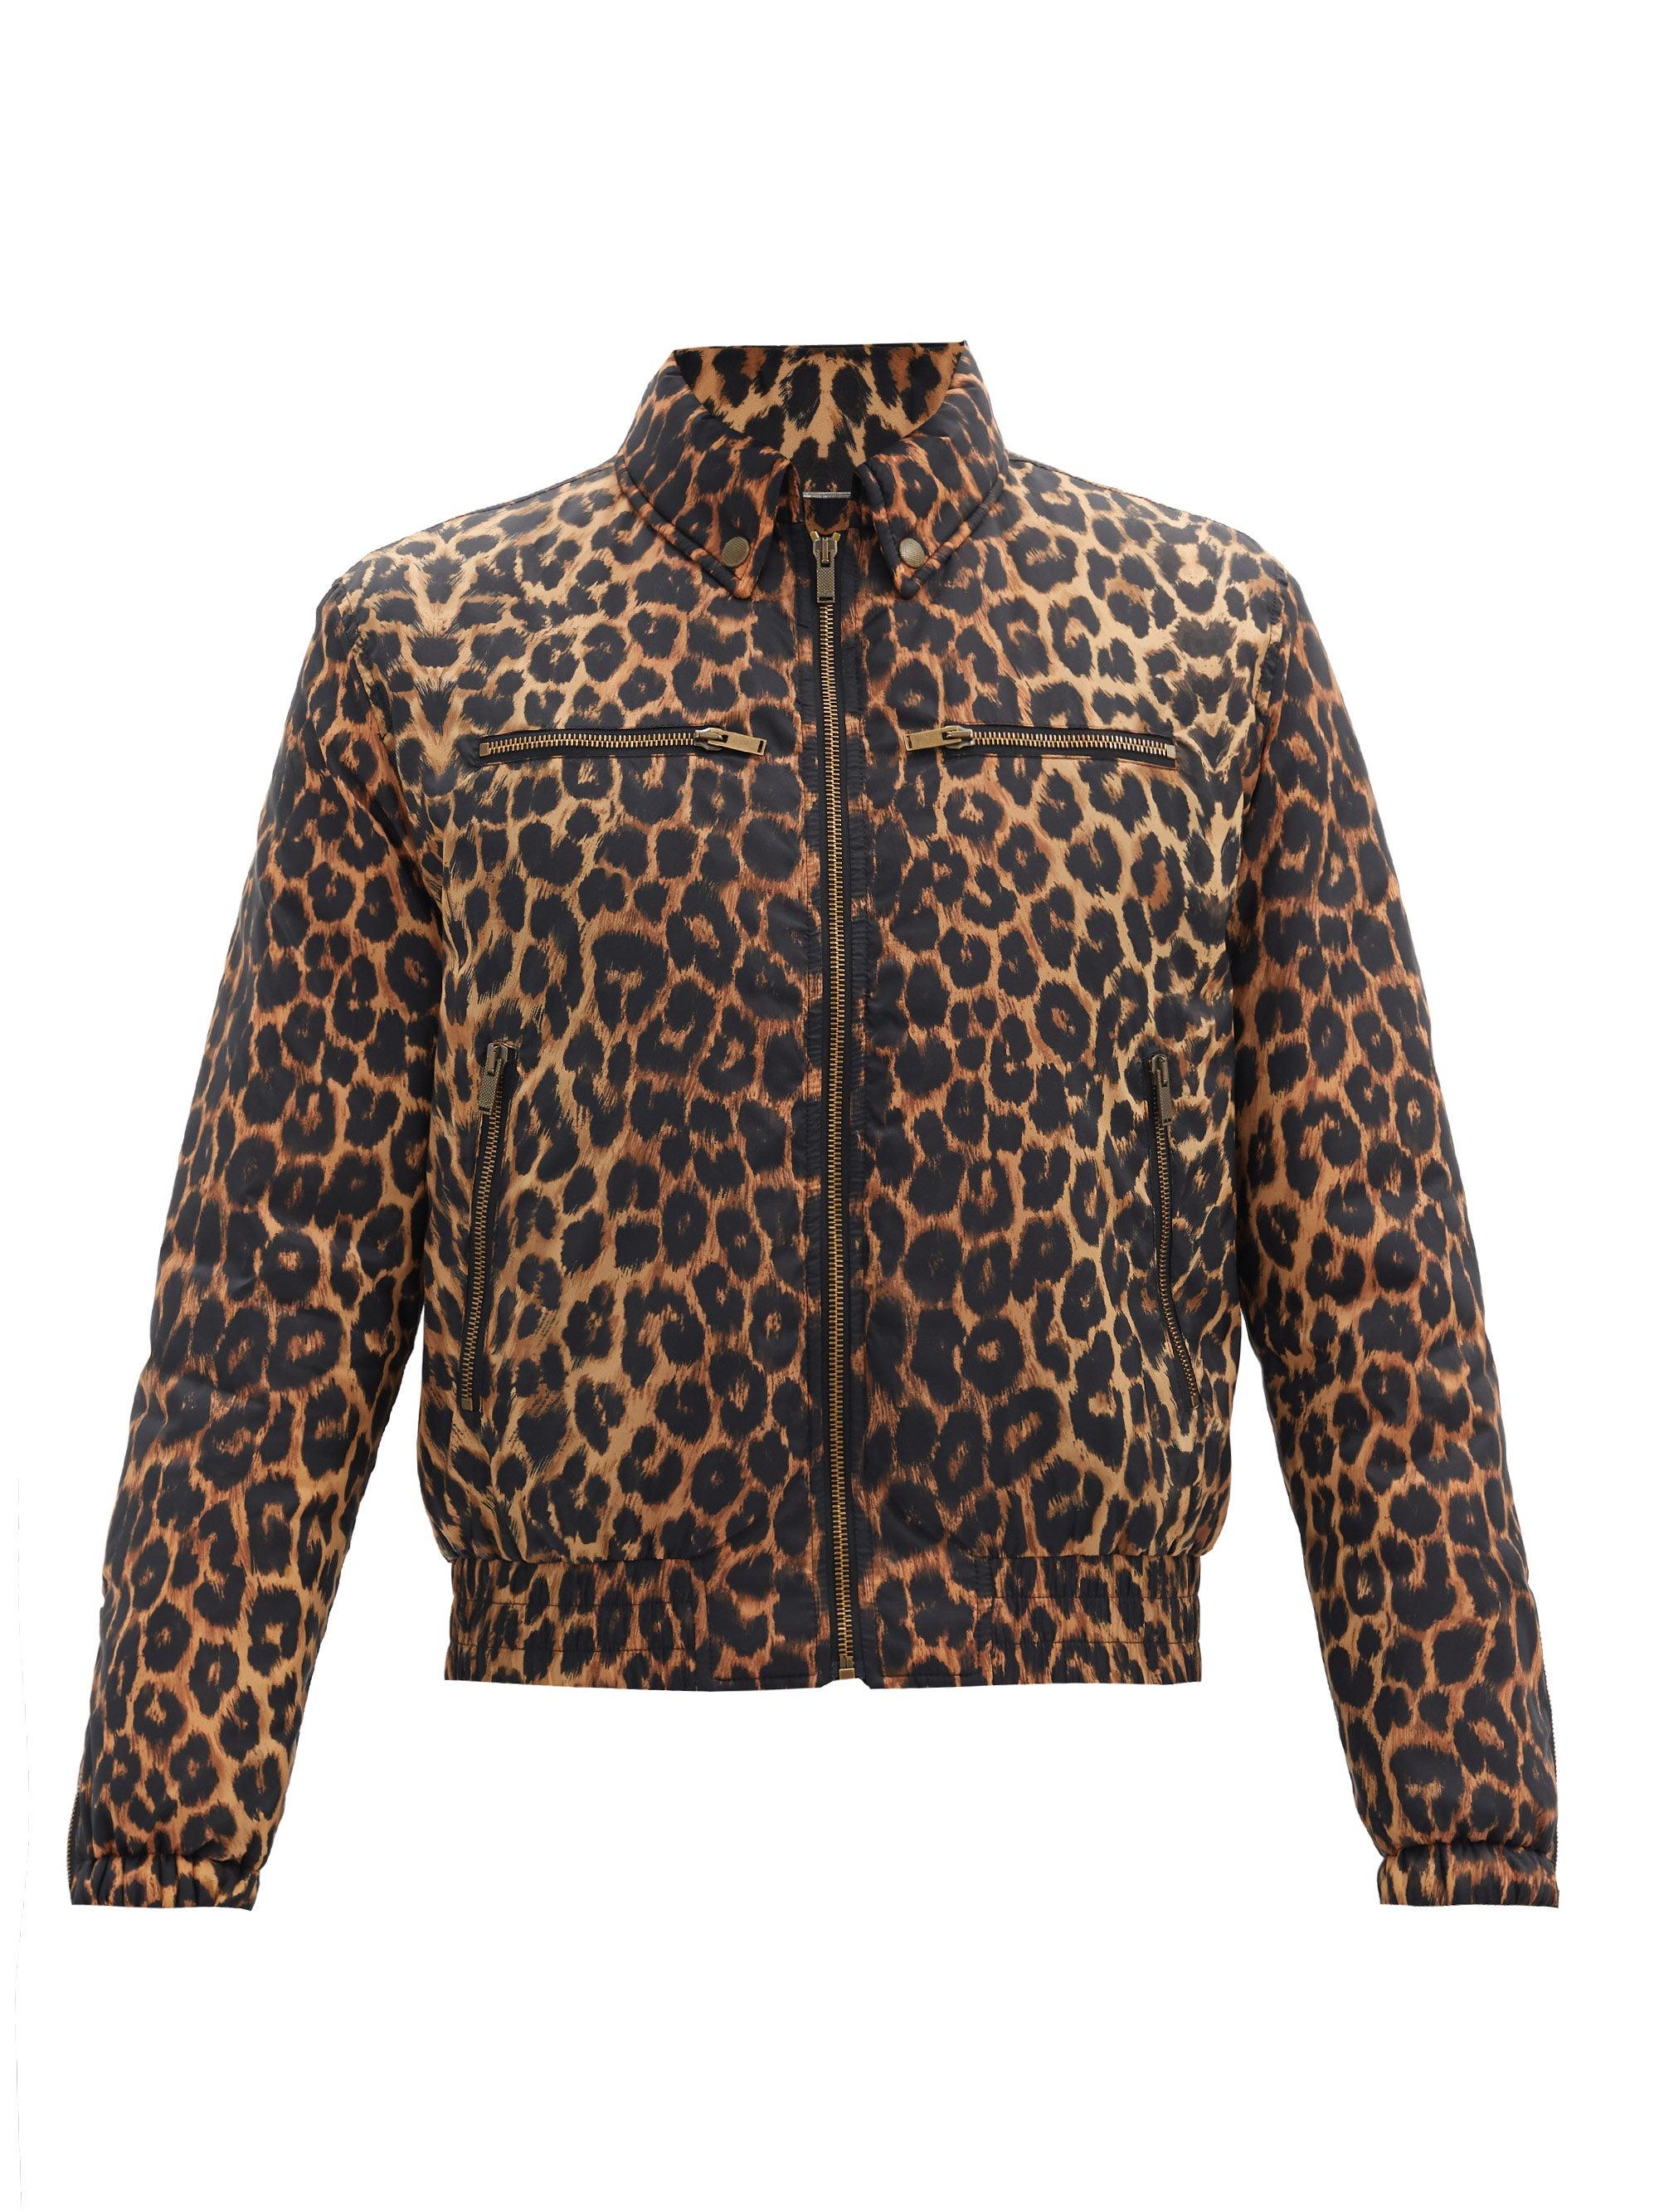 Saint Laurent Synthetic Leopard-print Bomber Jacket for Men - Lyst